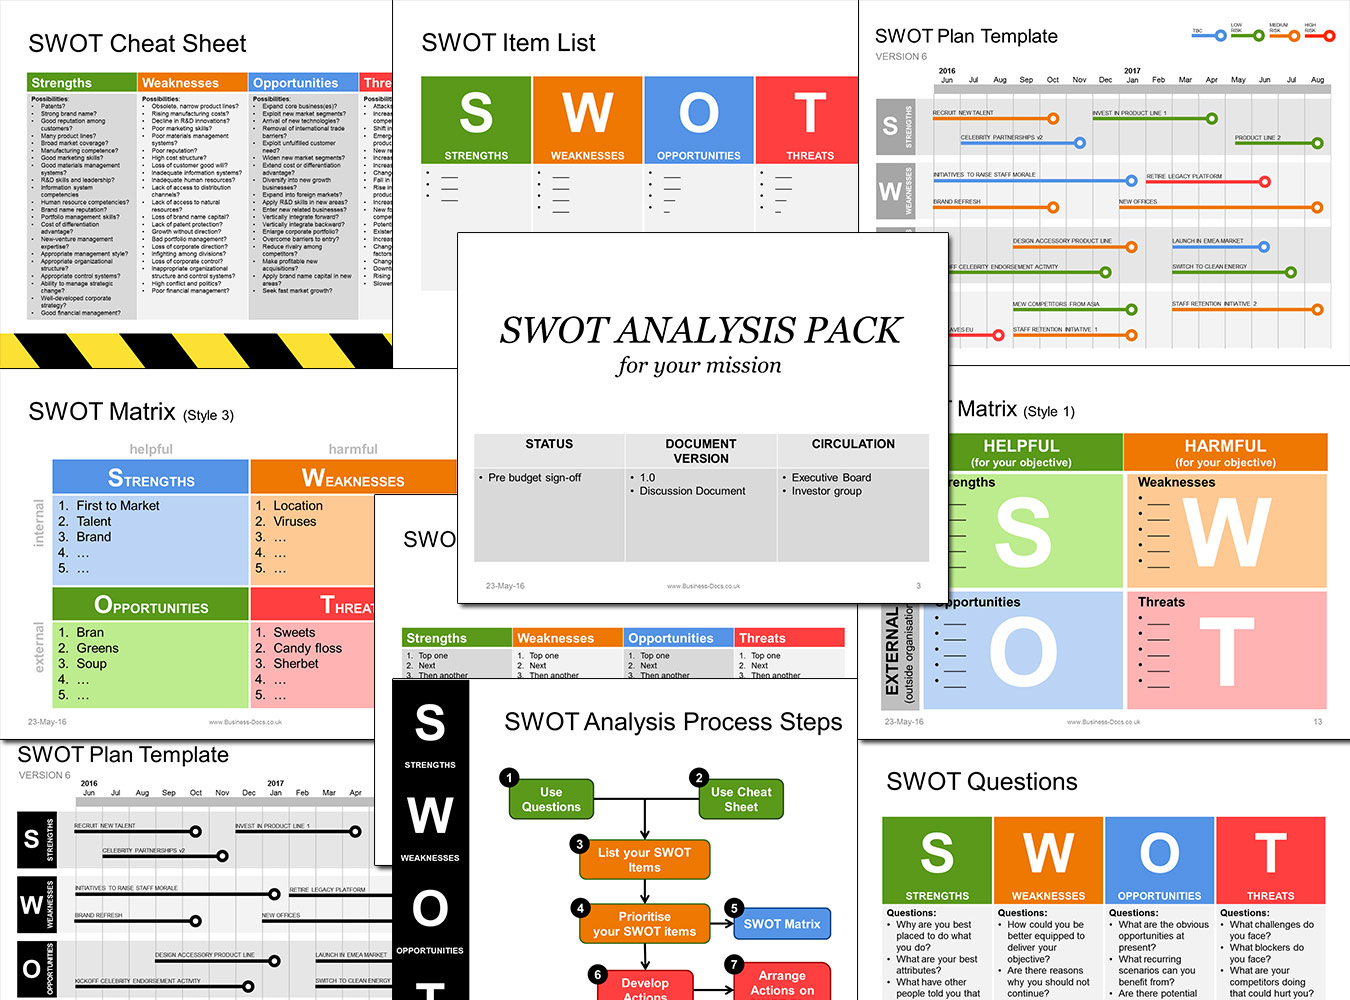 SWOT Analysis Templates Pack